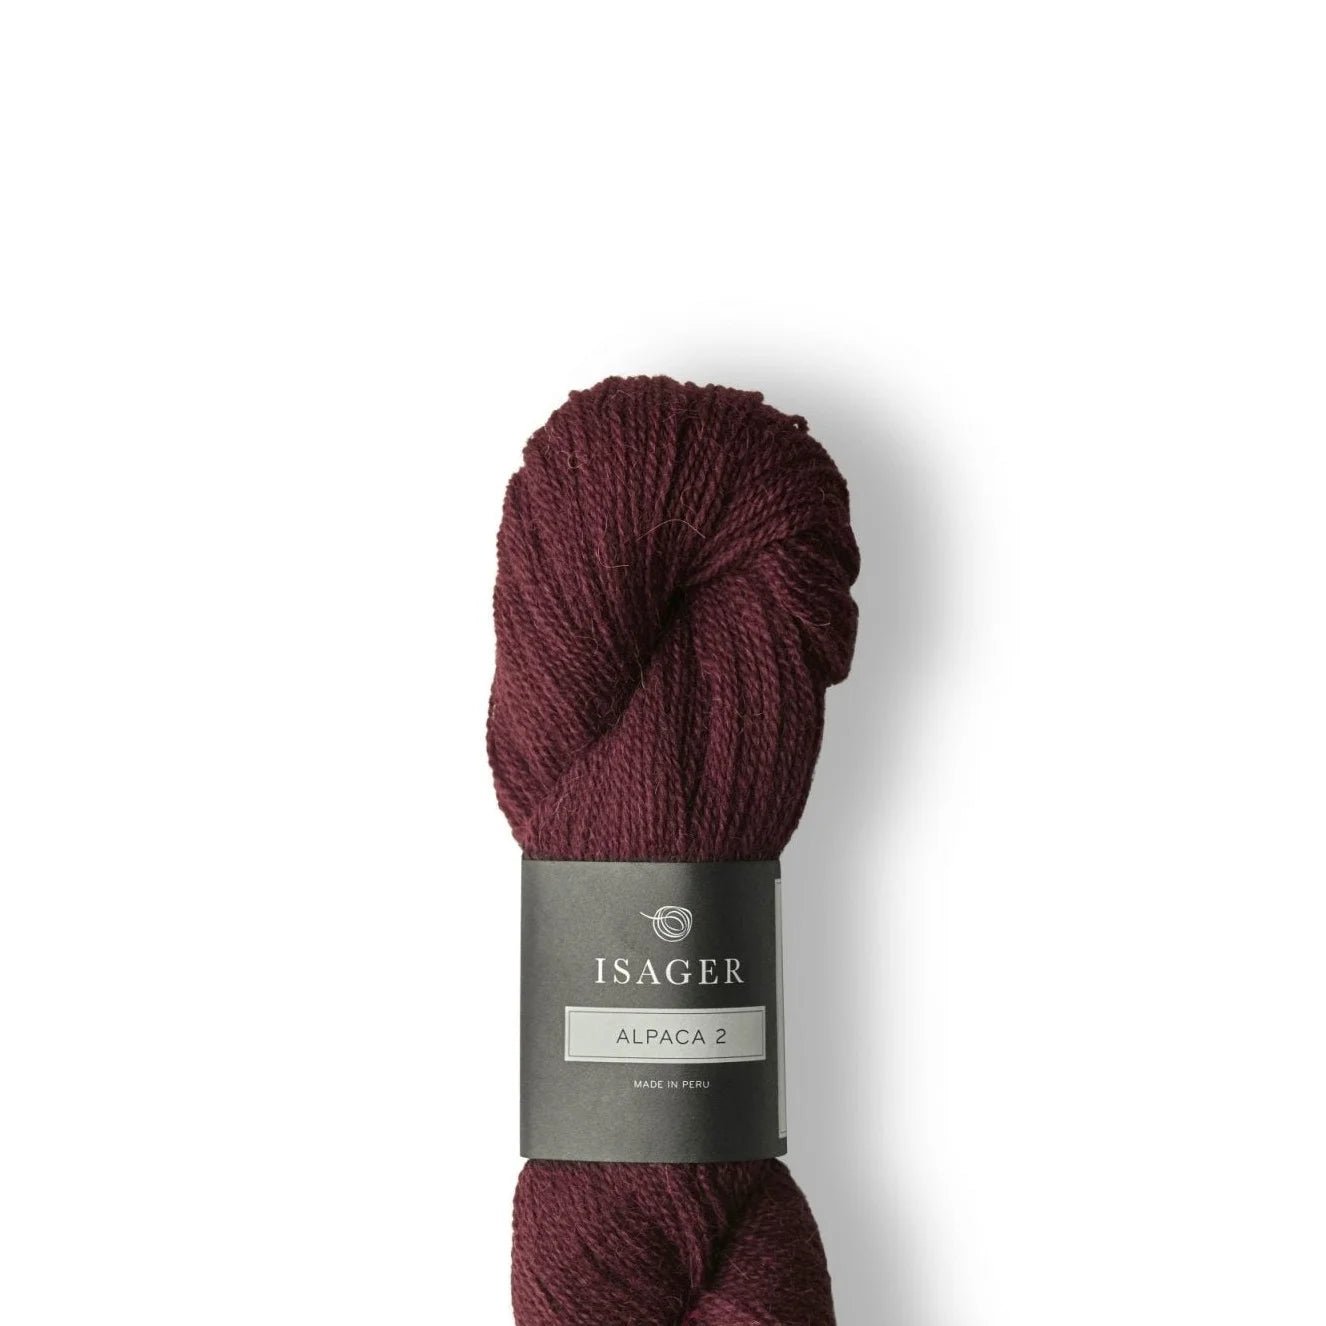 Isager Alpaca 2 - 36 - 4 Ply - Alpaca - The Little Yarn Store